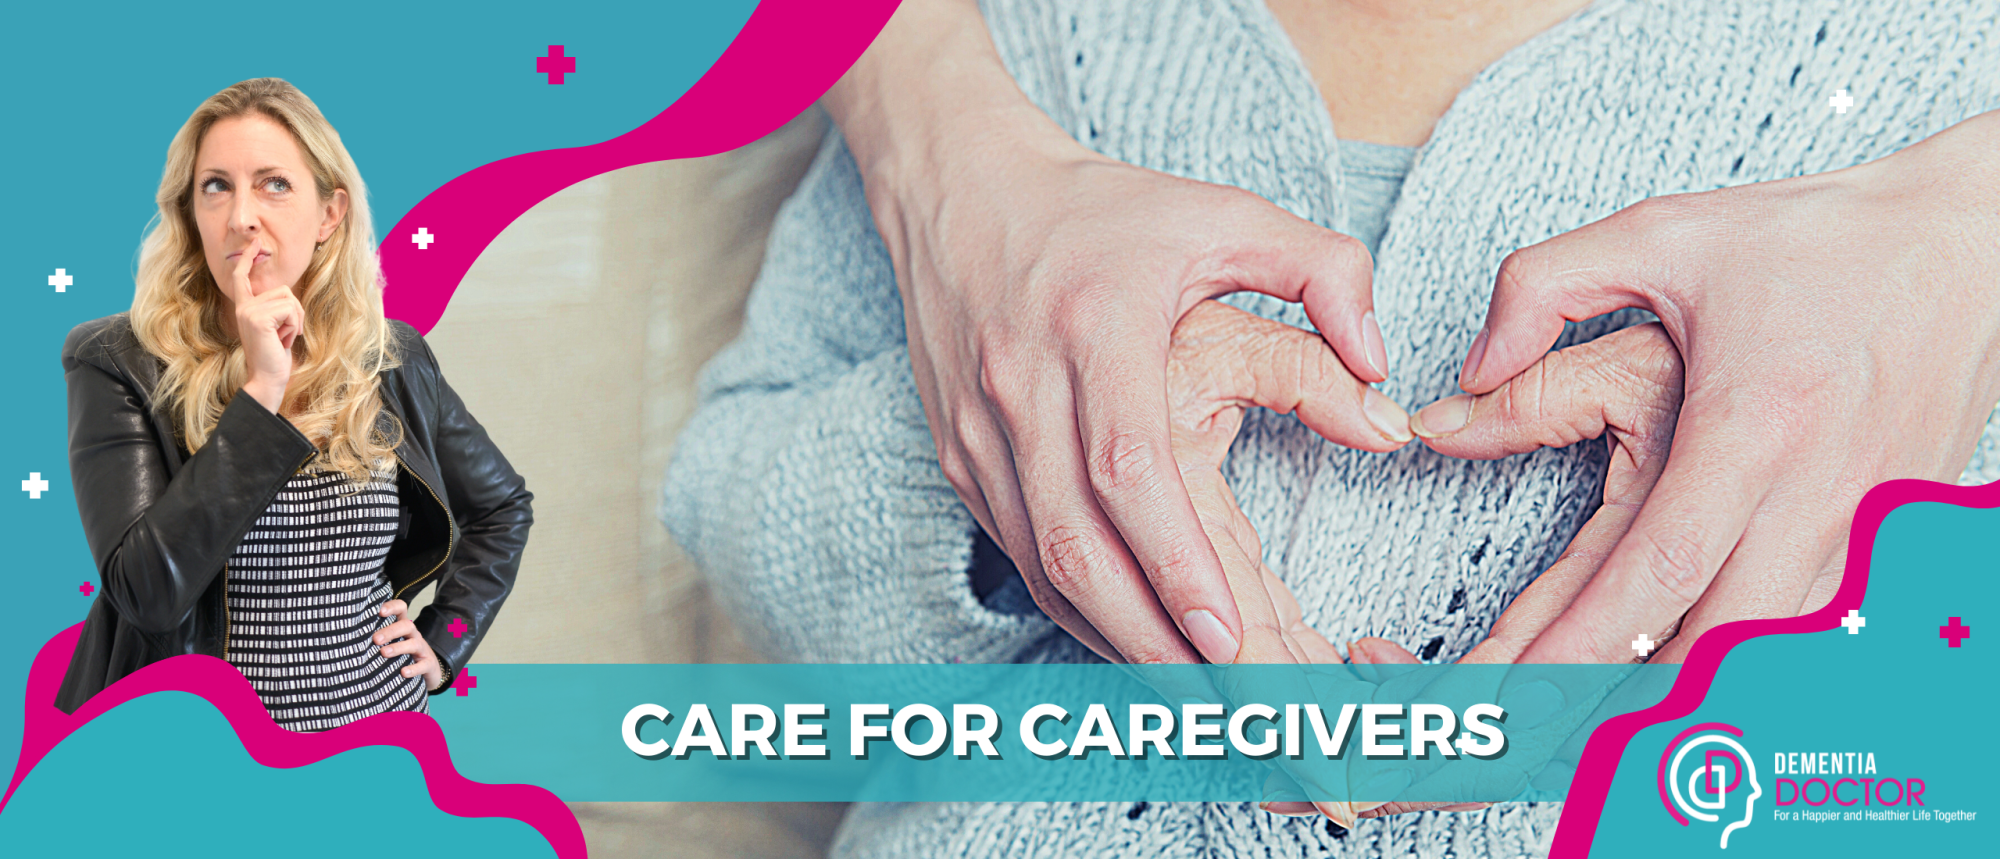 Blog care for caregivers